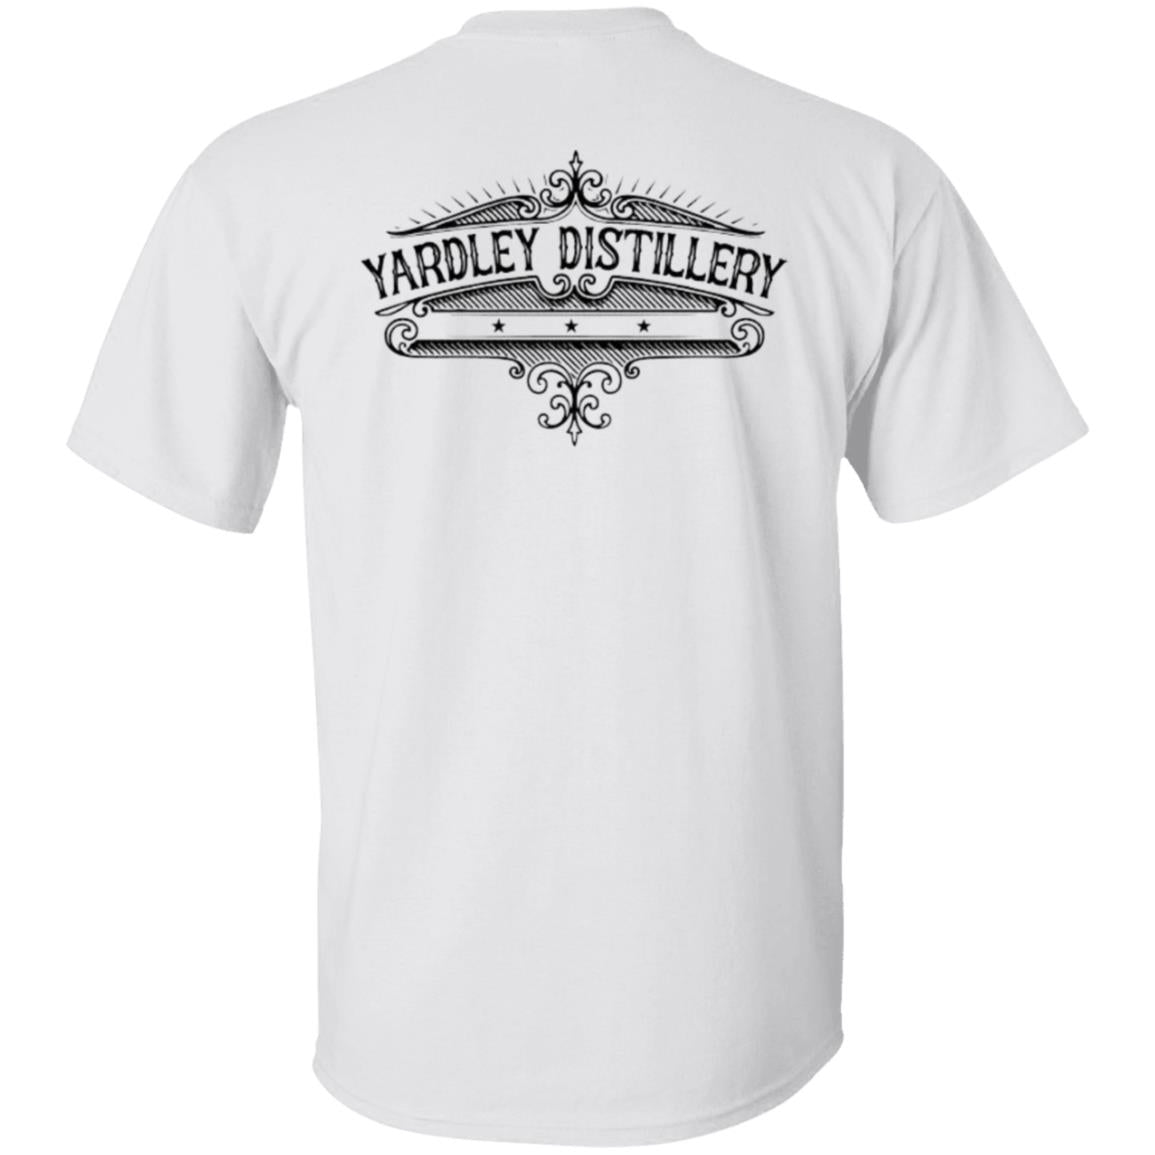 Yardley Distillery Logo (back only) T-shirt